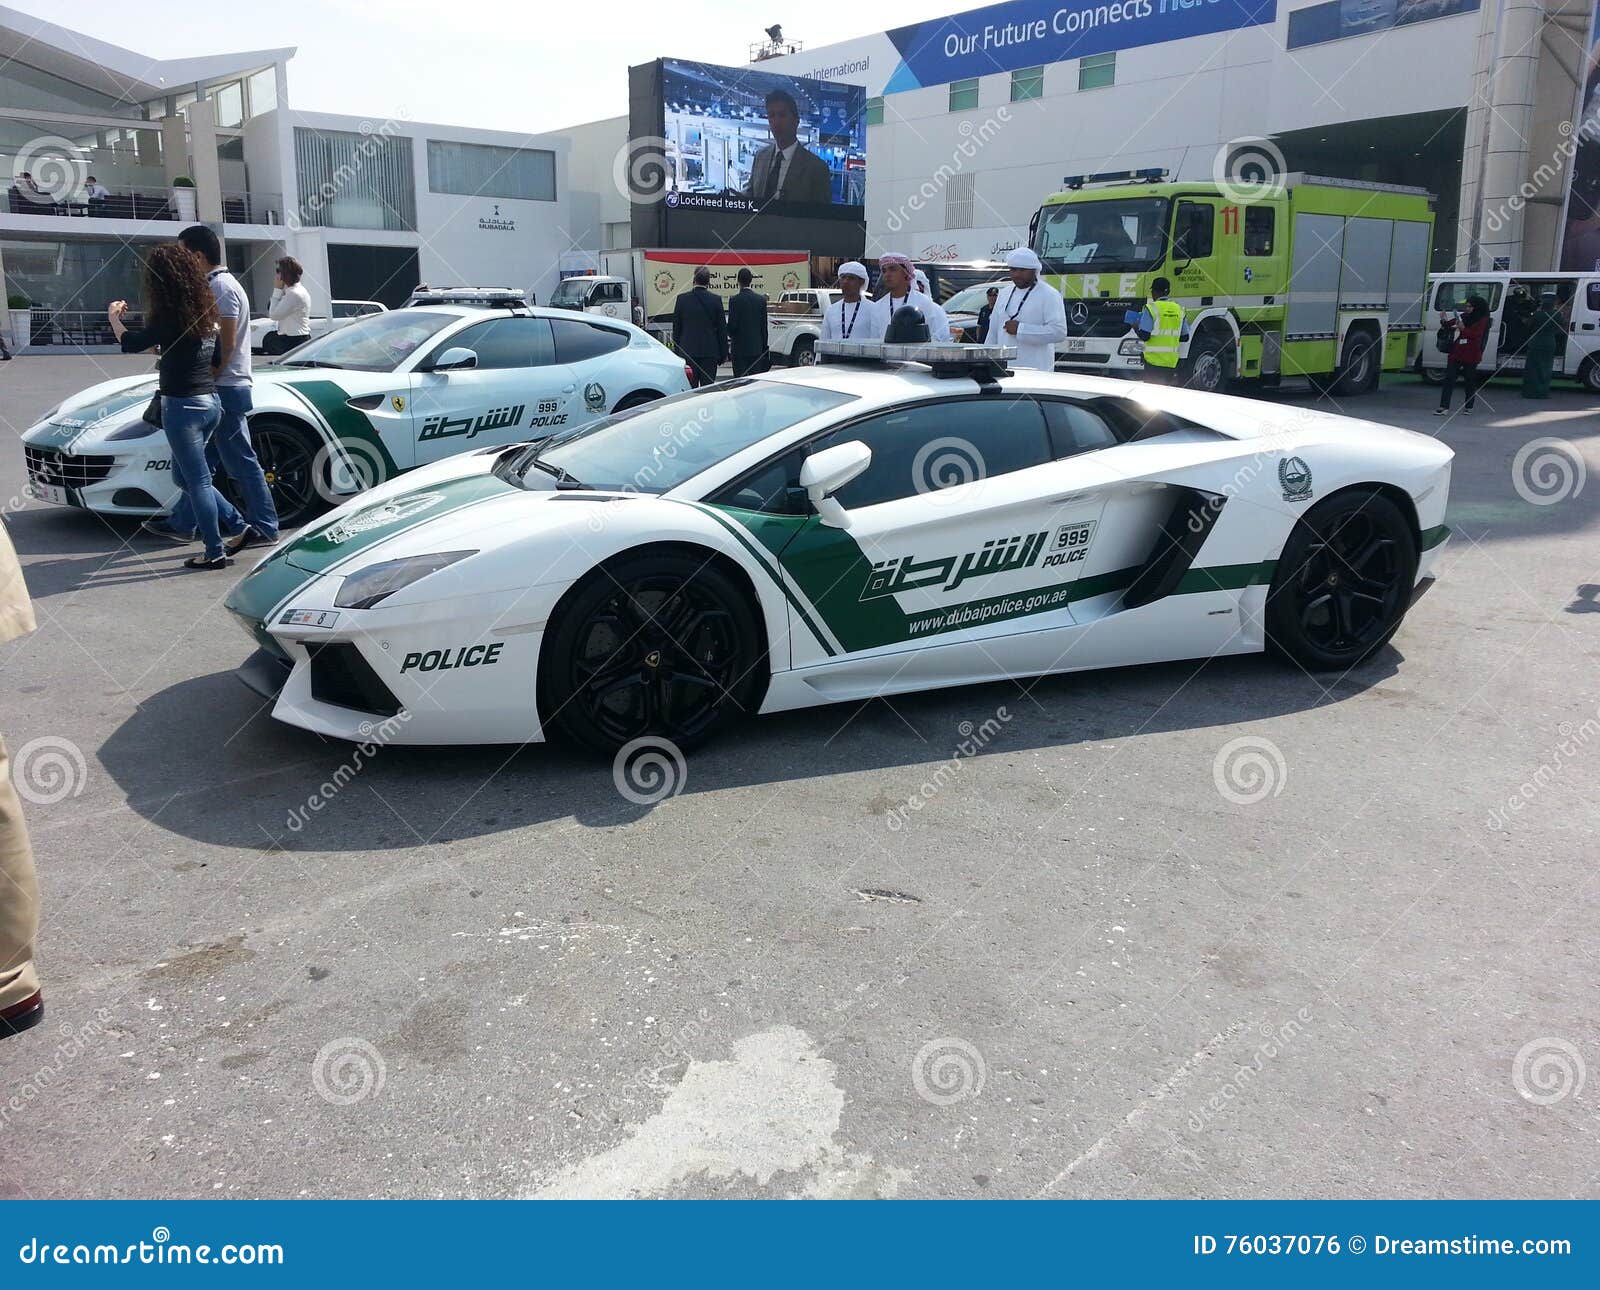 Lamborghini Gallardo Police Car Editorial Photo - Image of gallardo,  police: 76037076